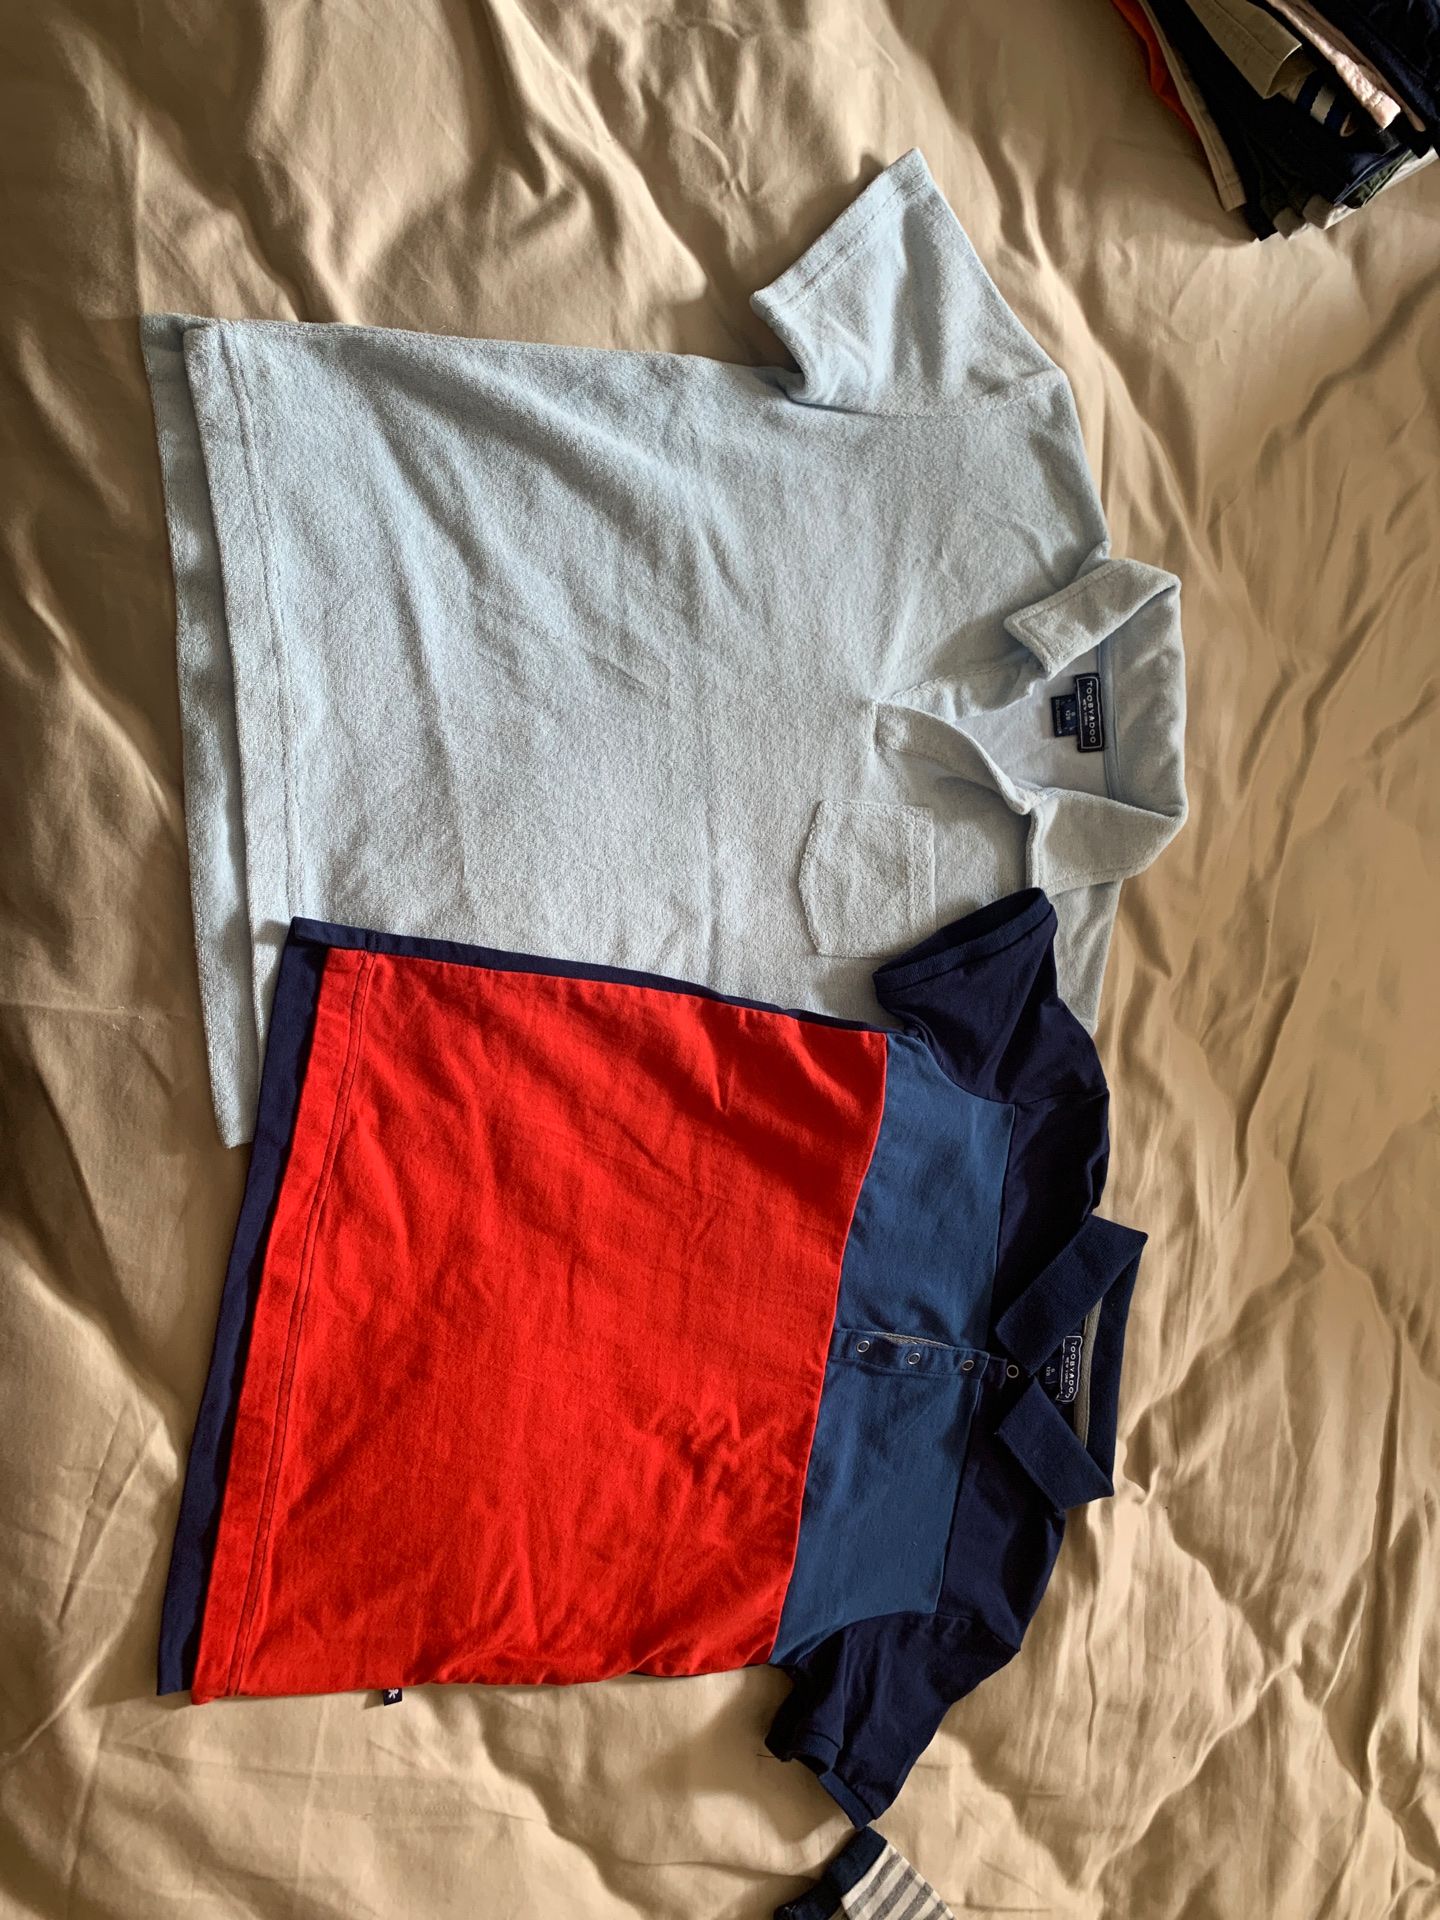 Tooby Doo polo shirts kids size 8 - $ 5 each